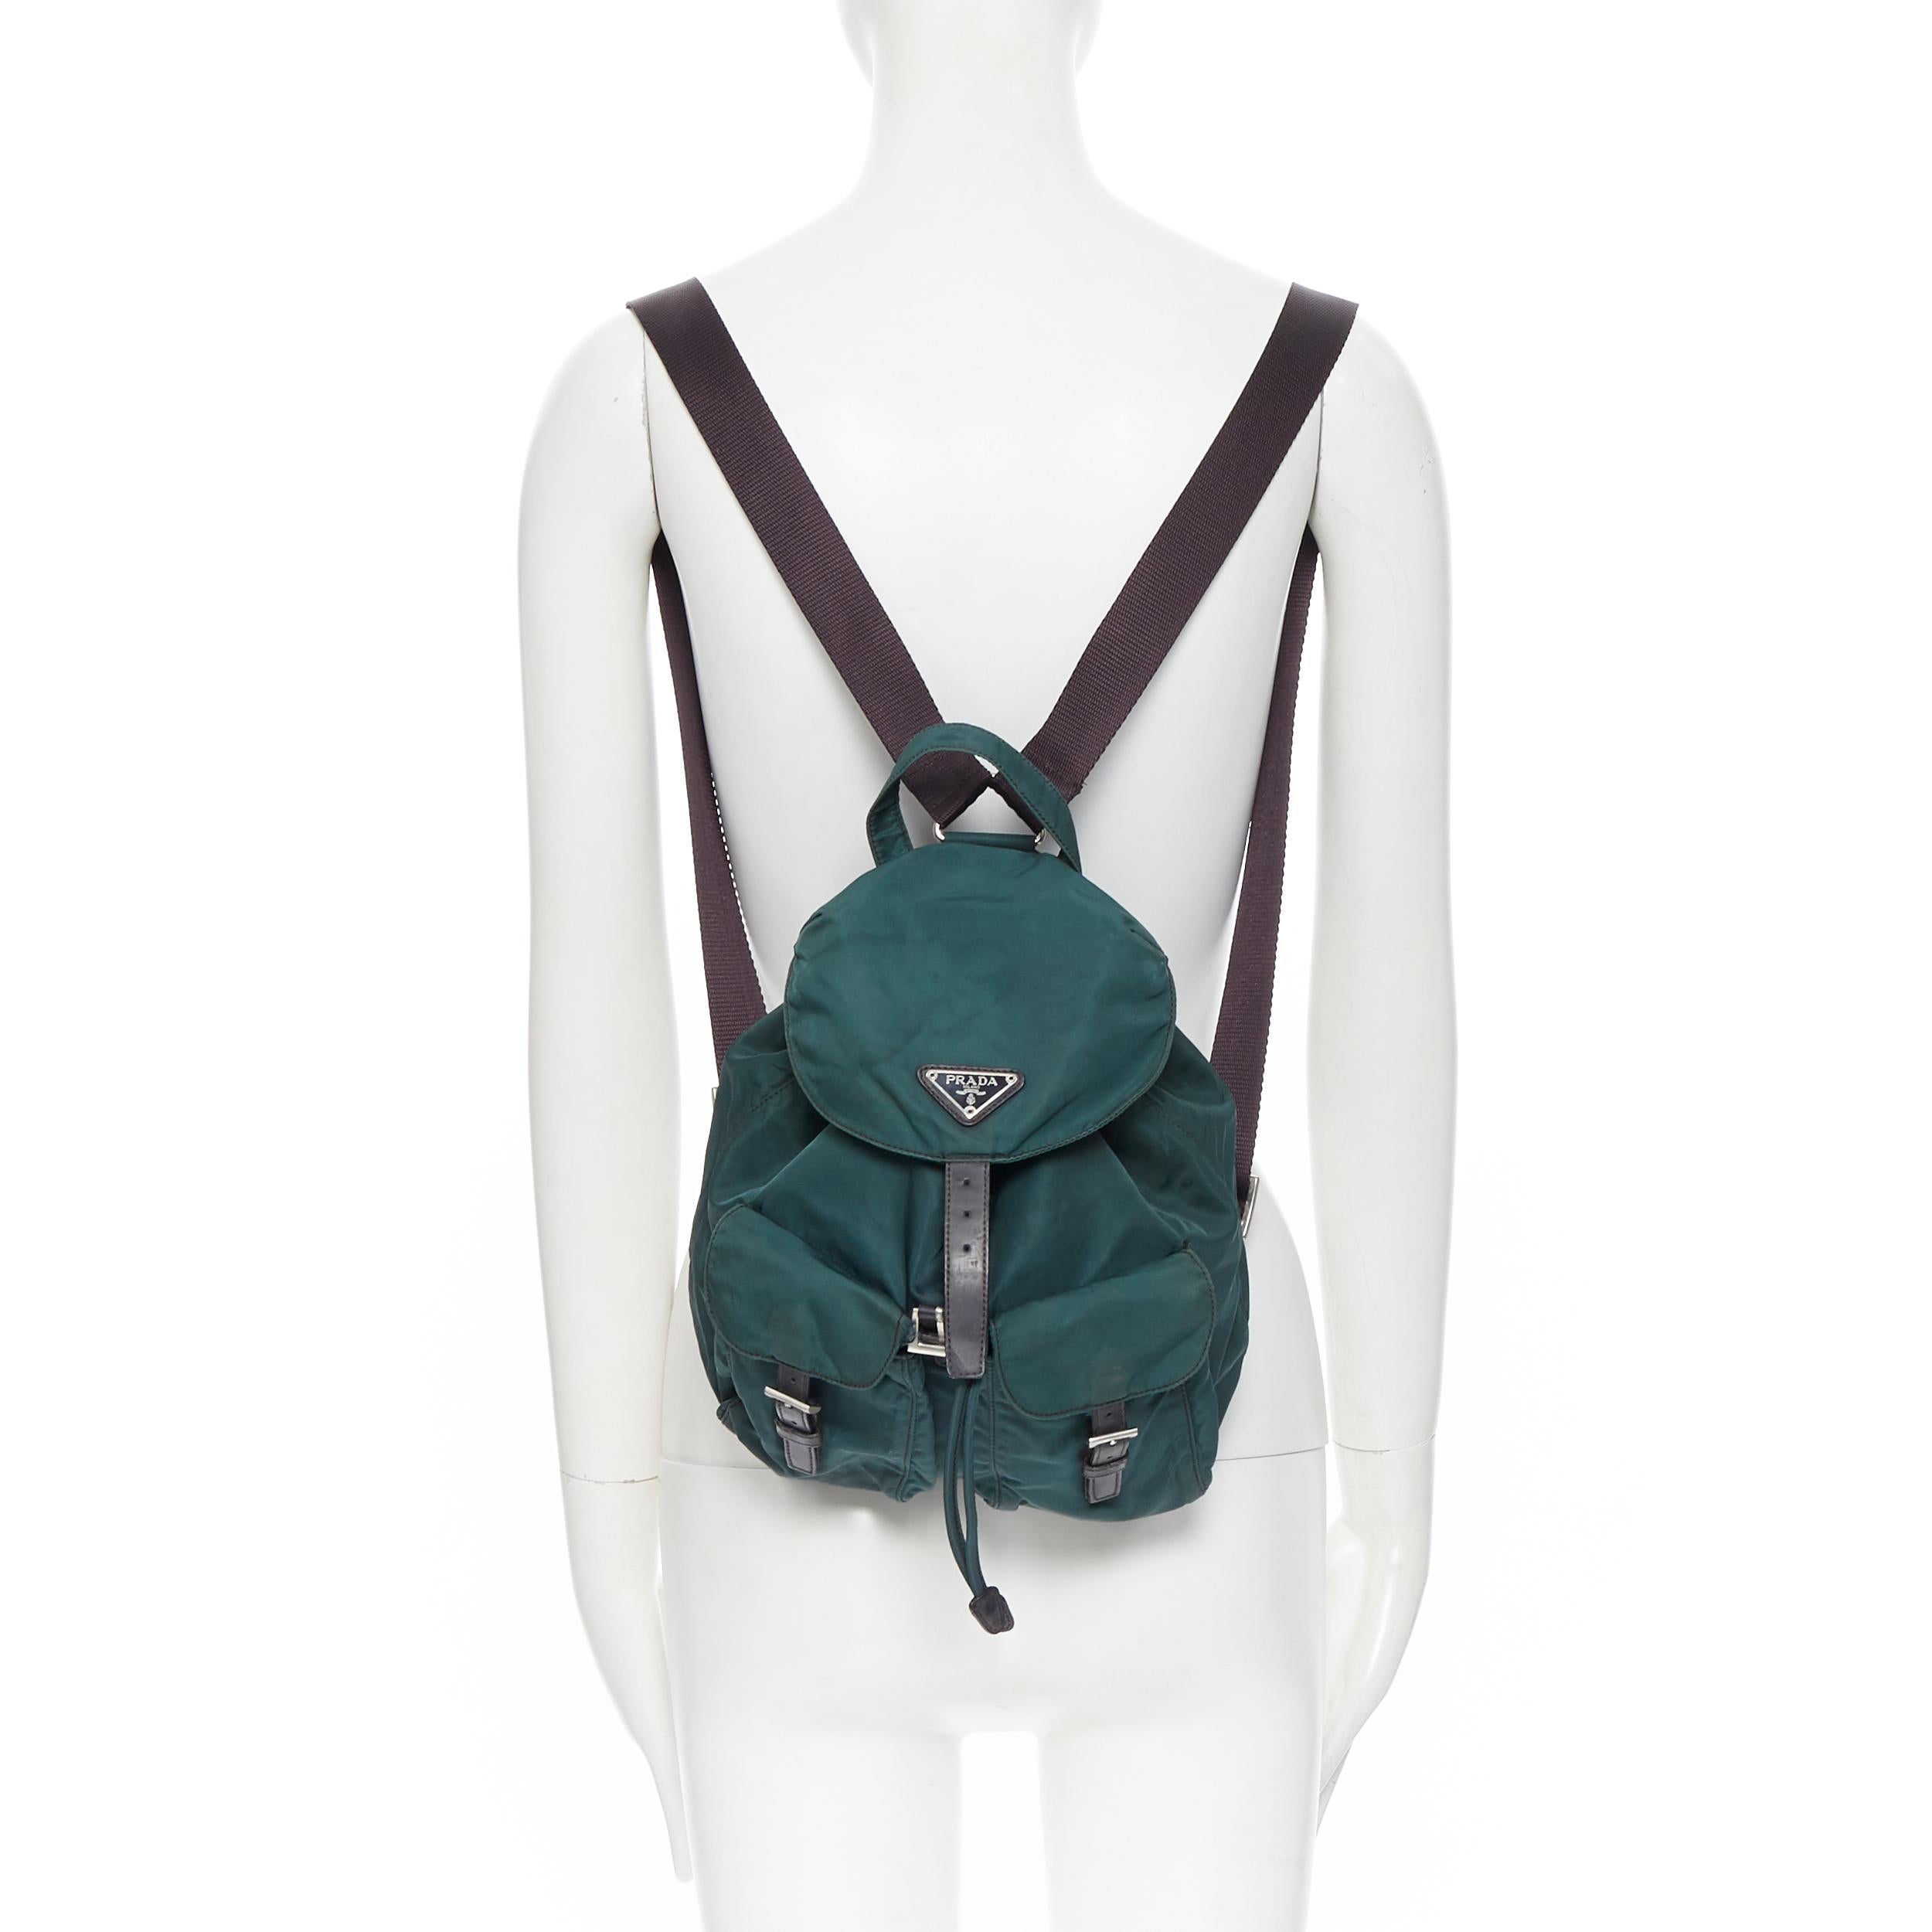 vintage PRADA Tessuto dark green nylon leather trim dual pocket backpack bag
Brand: Prada
Model Name / Style: Nylon backpack
Material: Nylon
Color: Green
Pattern: Solid
Closure: Drawstring
Extra Detail: Drawstring detail. Dual front pocket. Leather